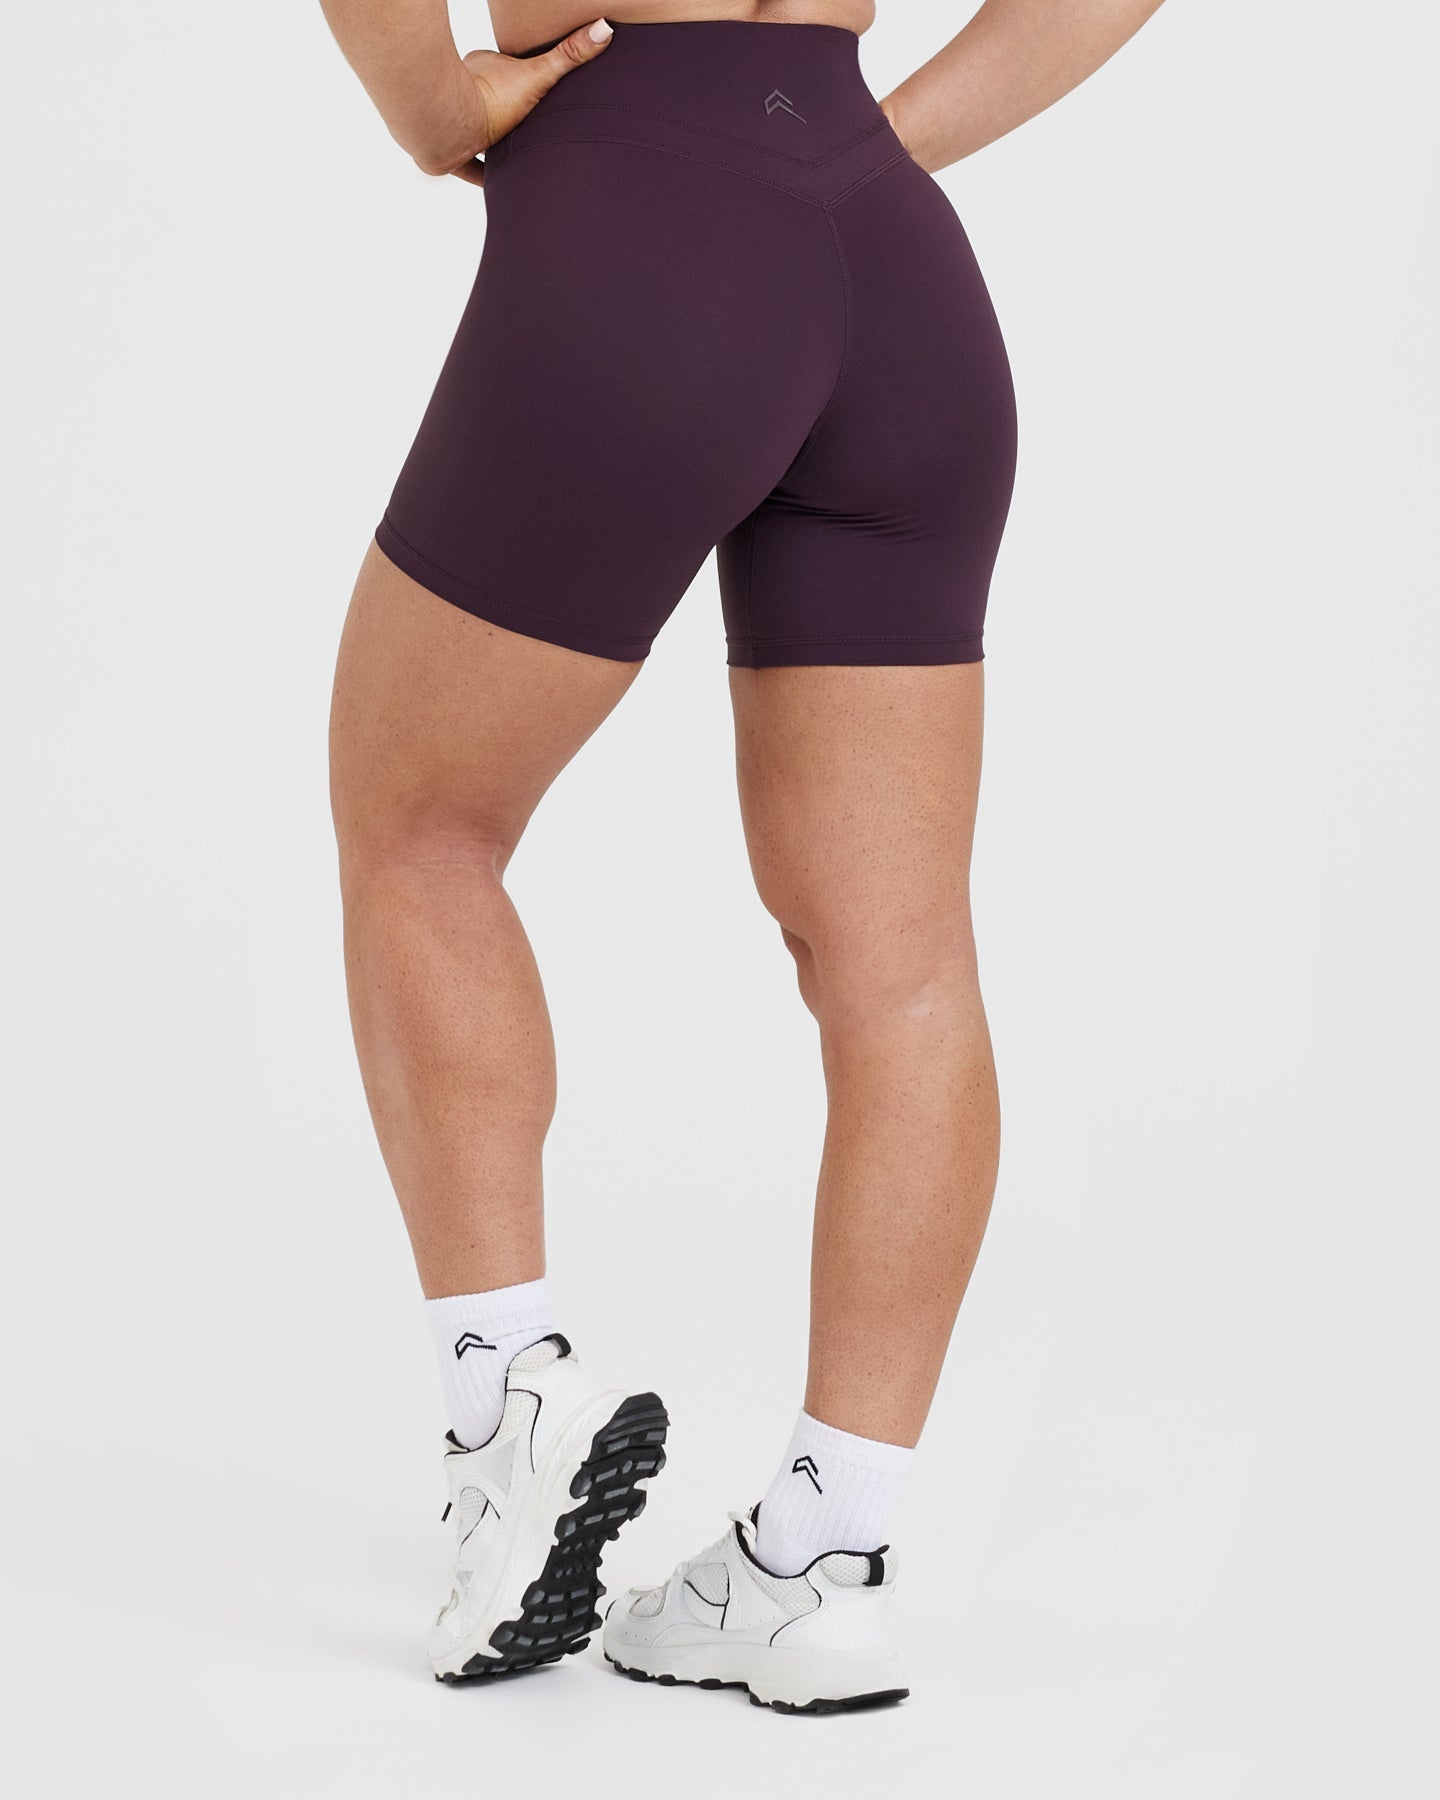 Infinite Seamless Workout Shorts - Prism Purple, Women's Shorts & Skorts